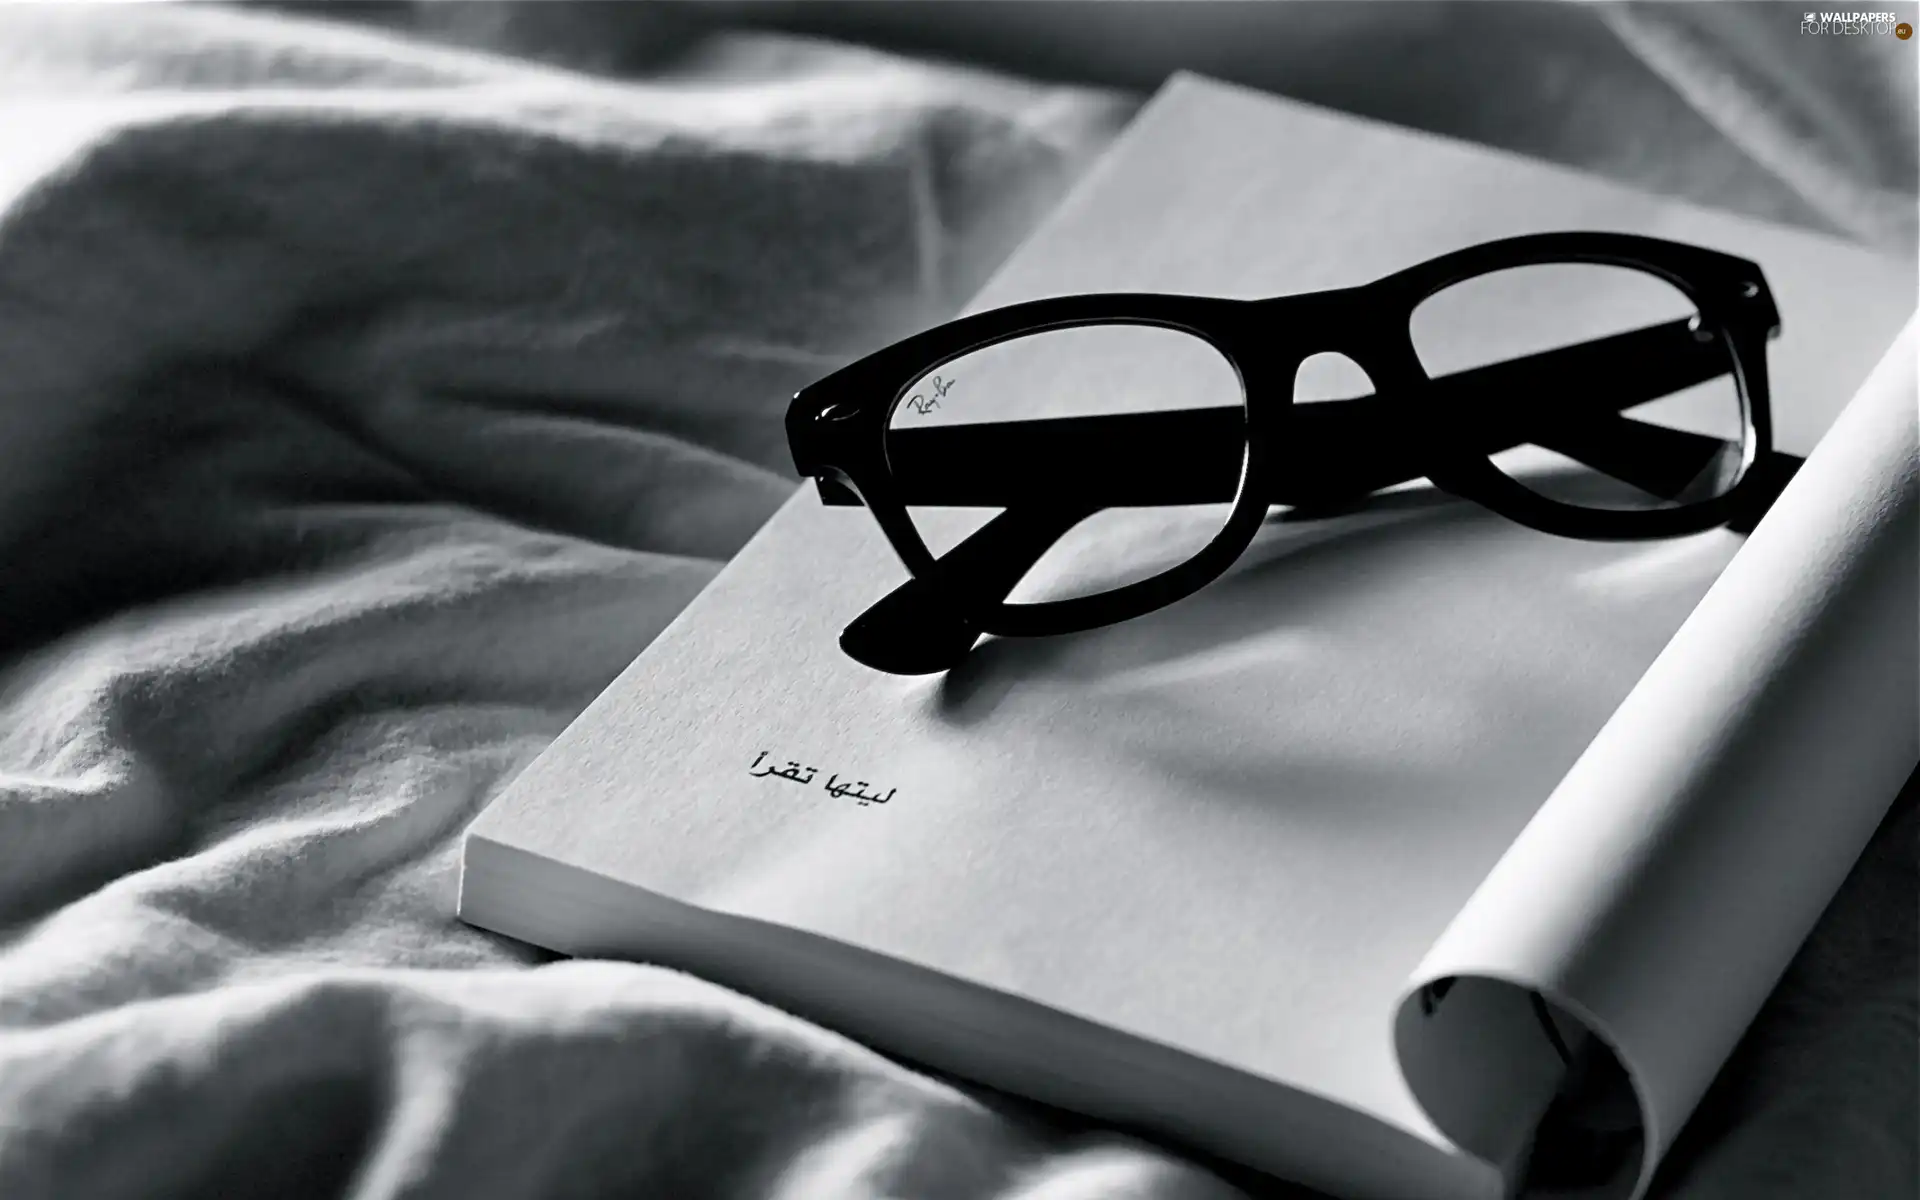 Glasses, note-book